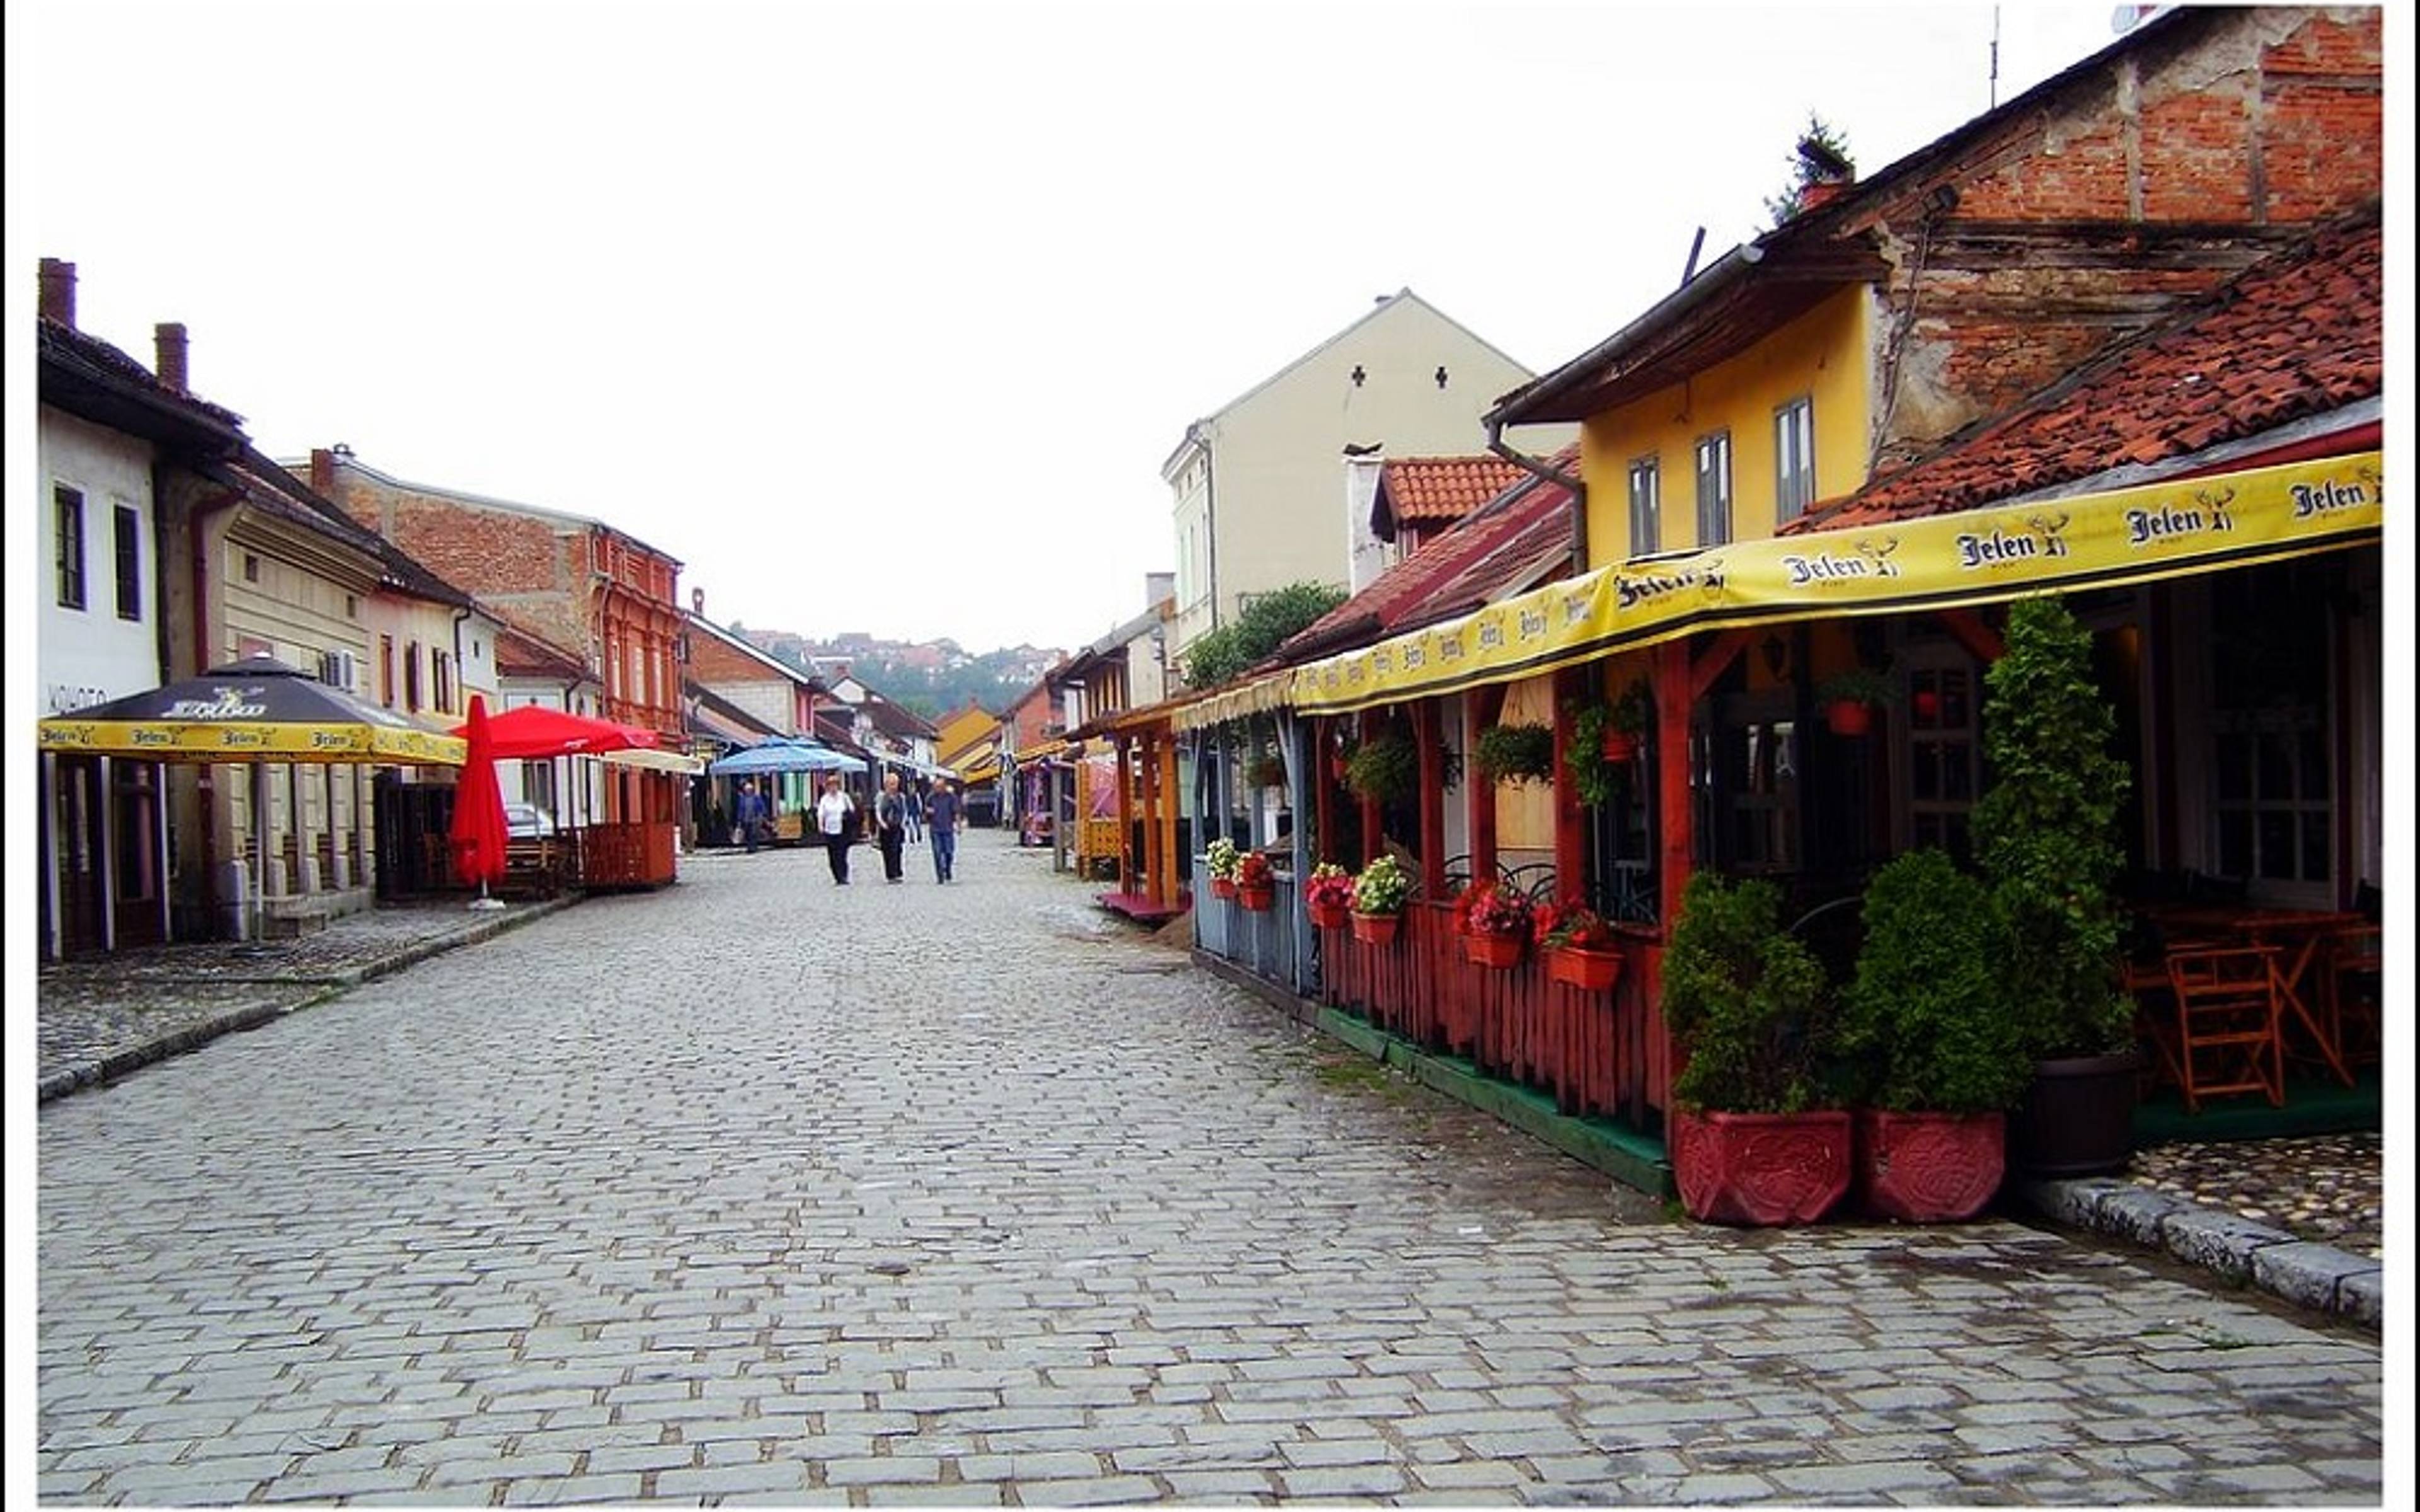 Topola et Valjevo, visite de l'Ouest de la Serbie